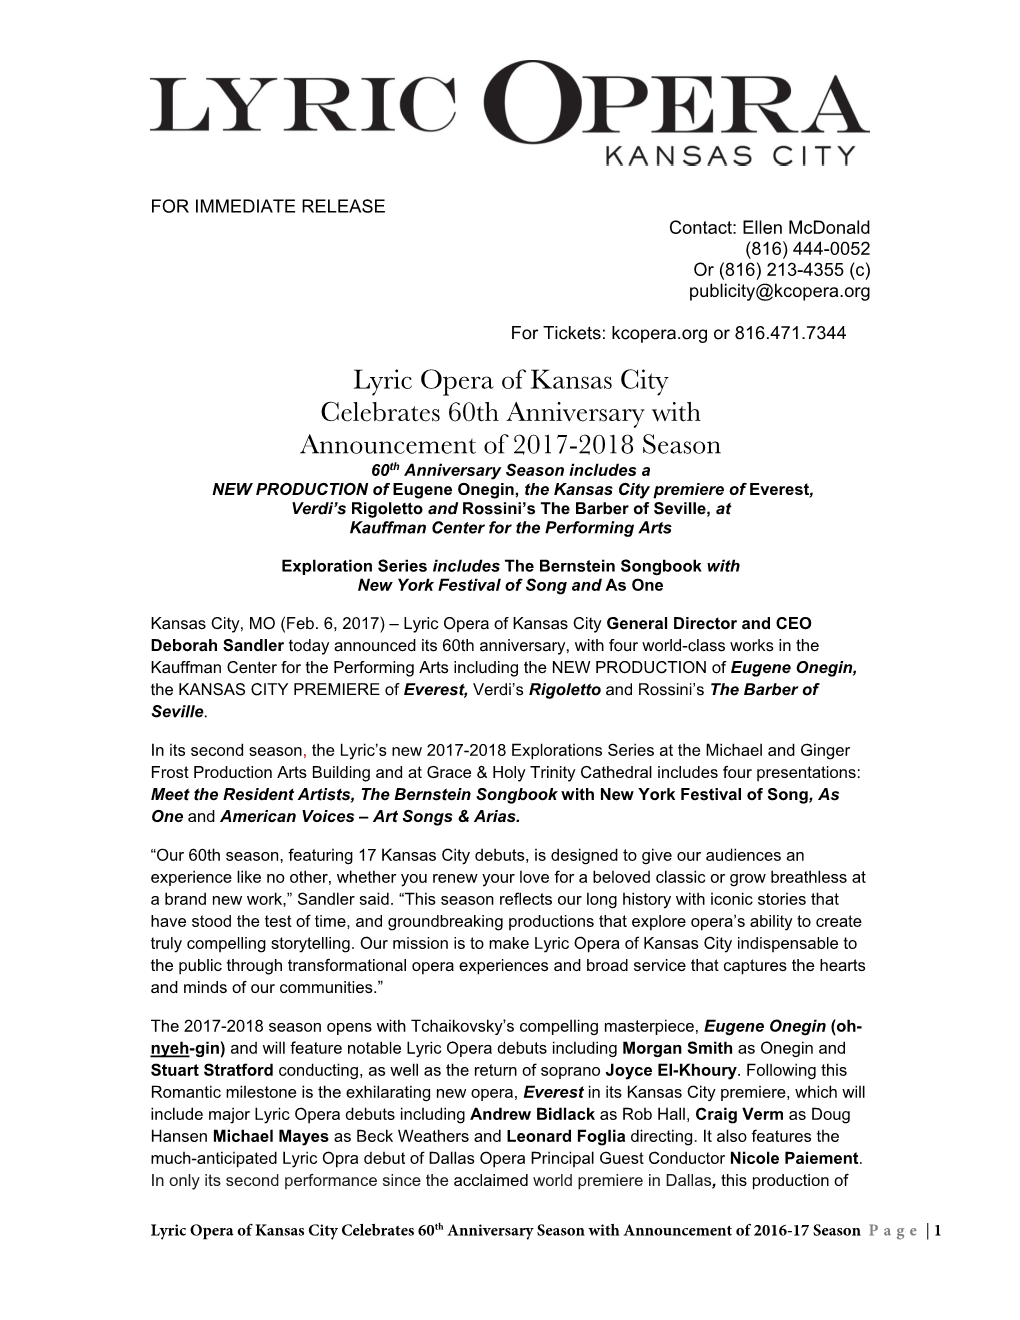 Lyric Opera of Kansas City Celebrates 60Th Anniversary with Announcement of 2017-2018 Season